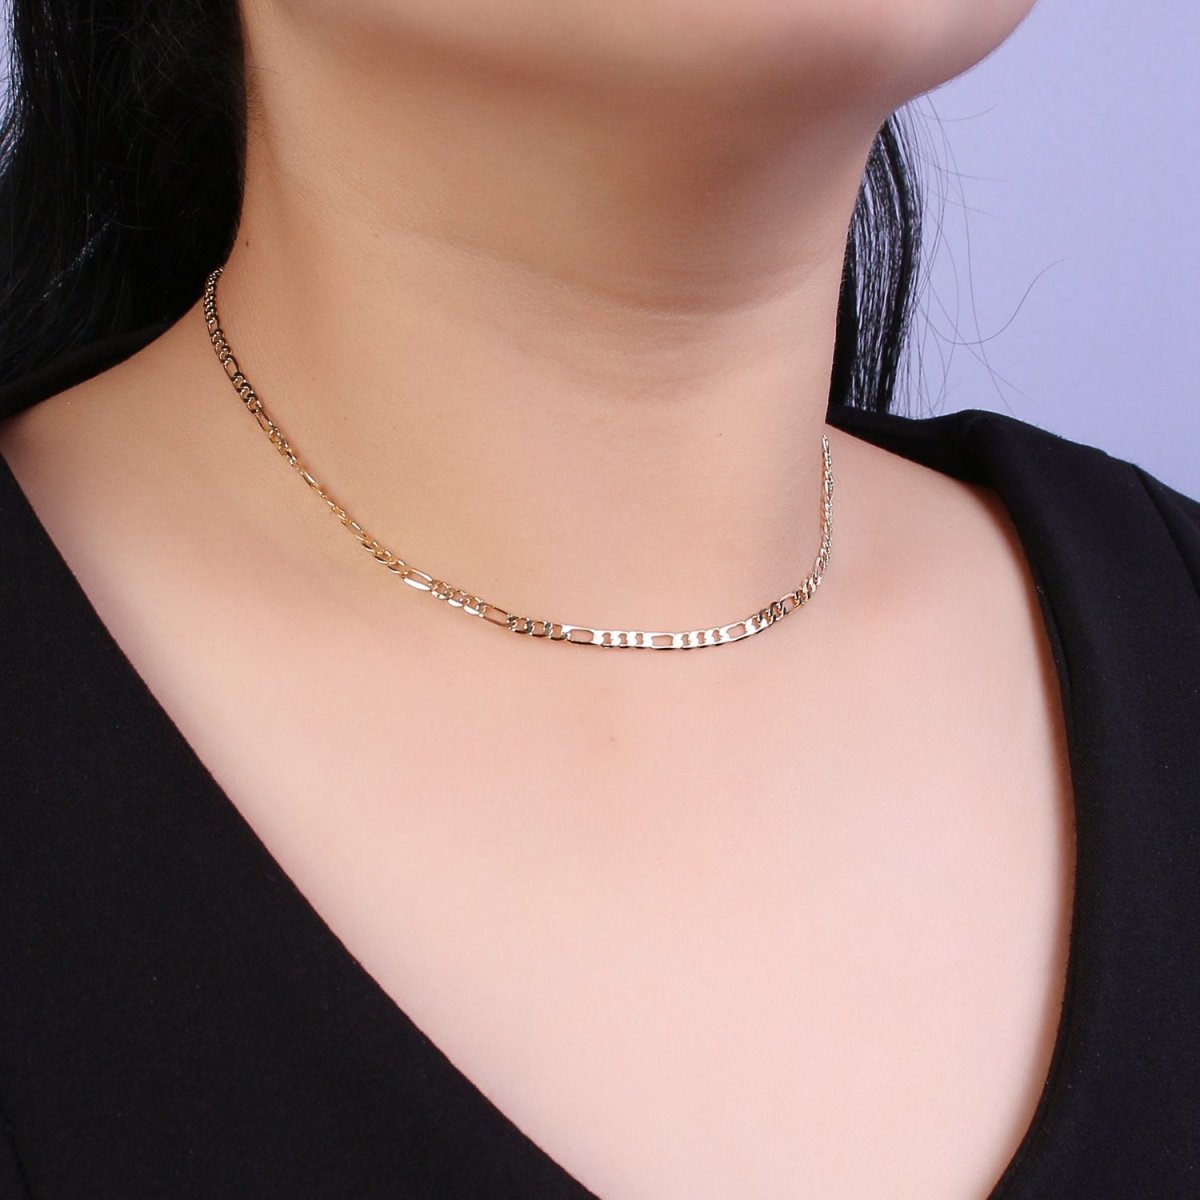 14K Gold Filled Figaro Necklace • Minimalist Necklace Chain • Unisex Figaro Chain • Figaro 16" 18" 20" Chains Ready to Wear | WA-666 WA-676 WA-677 Clearance Pricing - DLUXCA